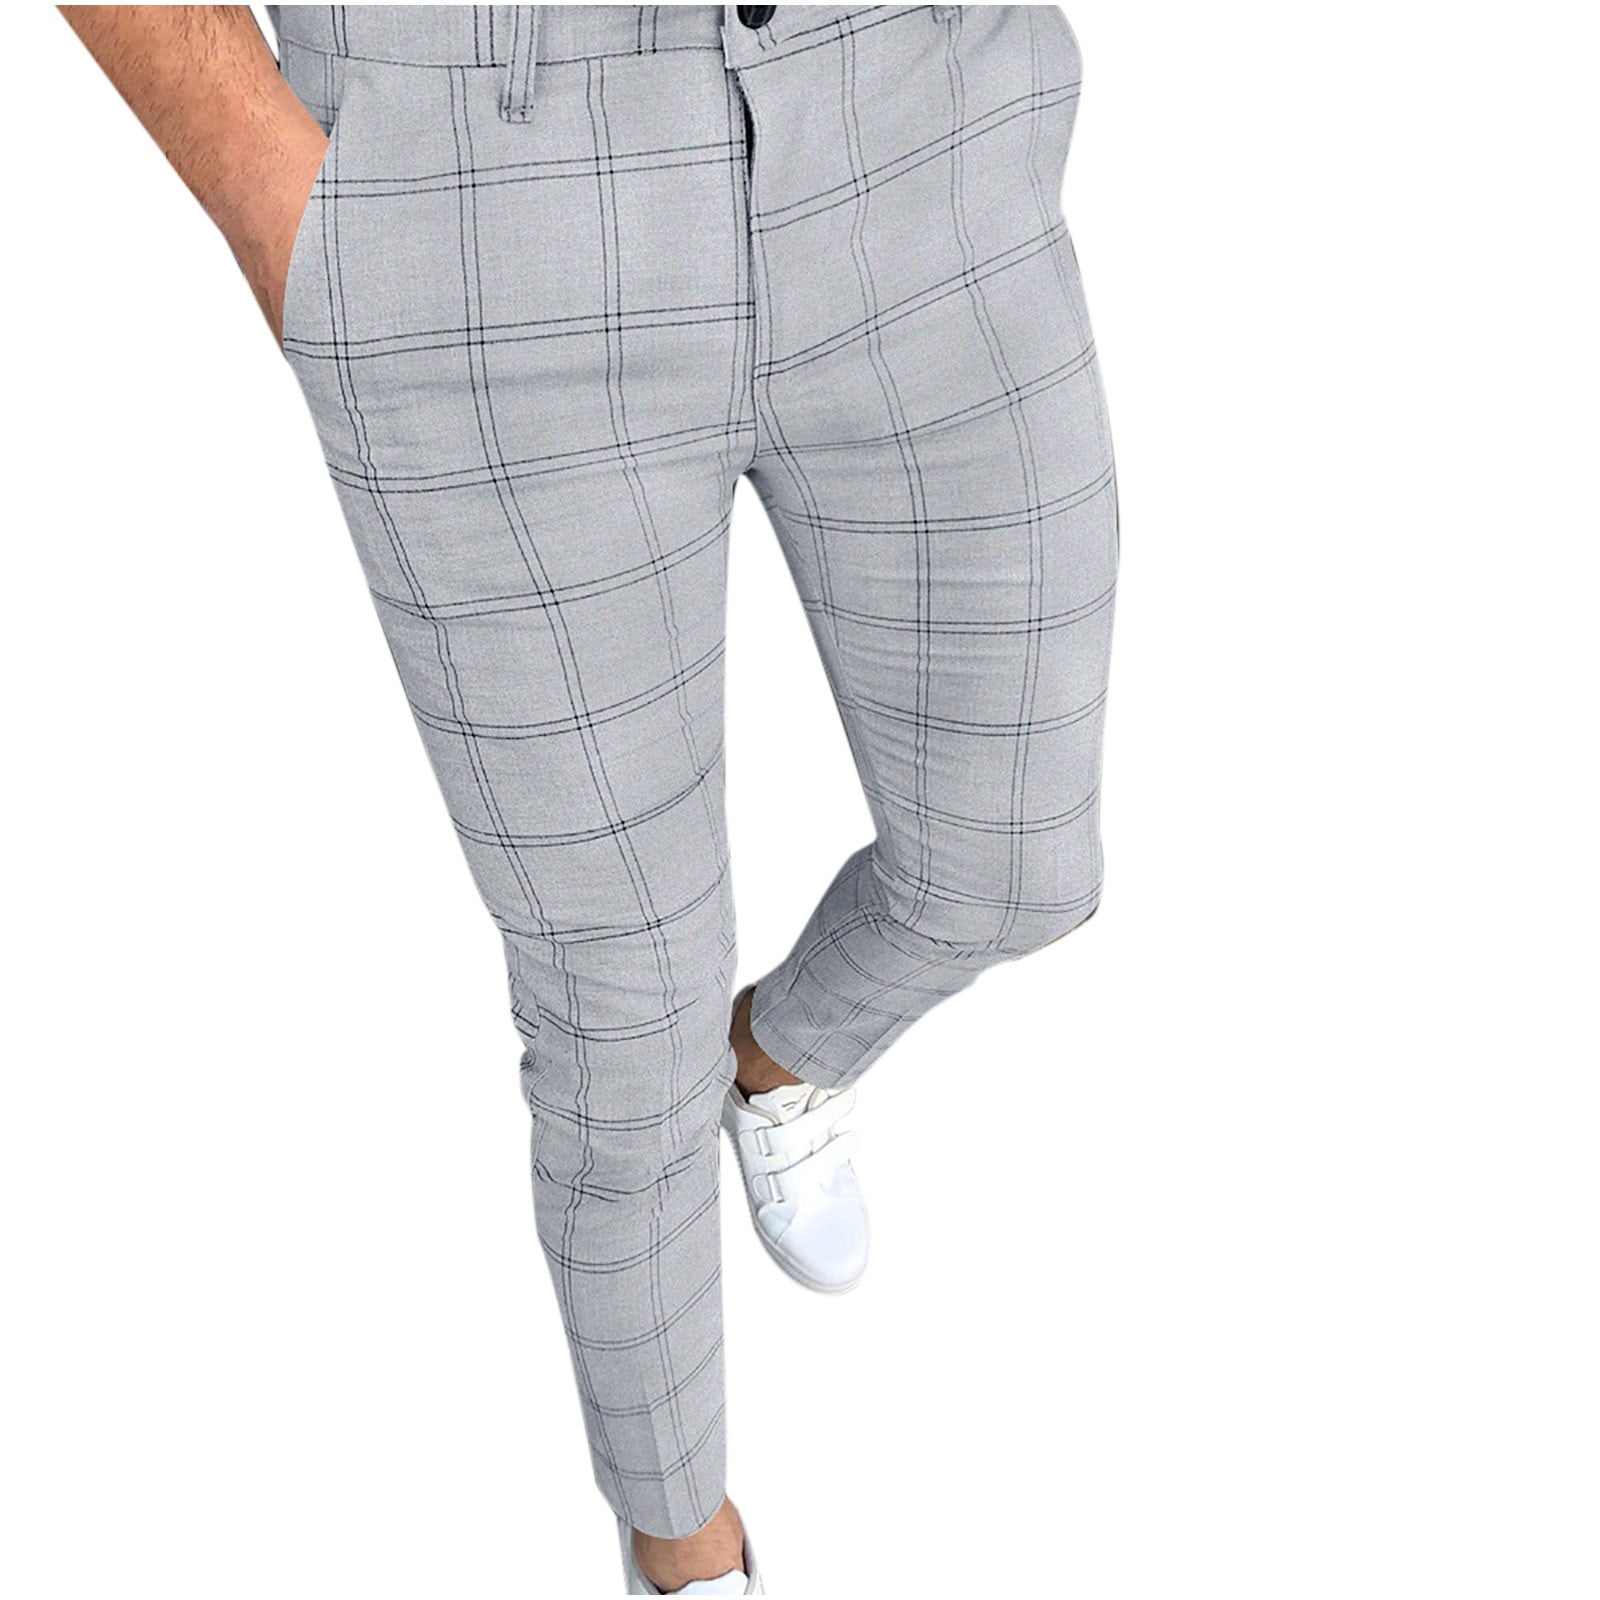 Mrat Full Length Pants Outfits For Women Pants Men Fashion Comfortable Pants  Casual Plaid Flat-Front Skinny Business Pencil Long Yoga Pants Female 